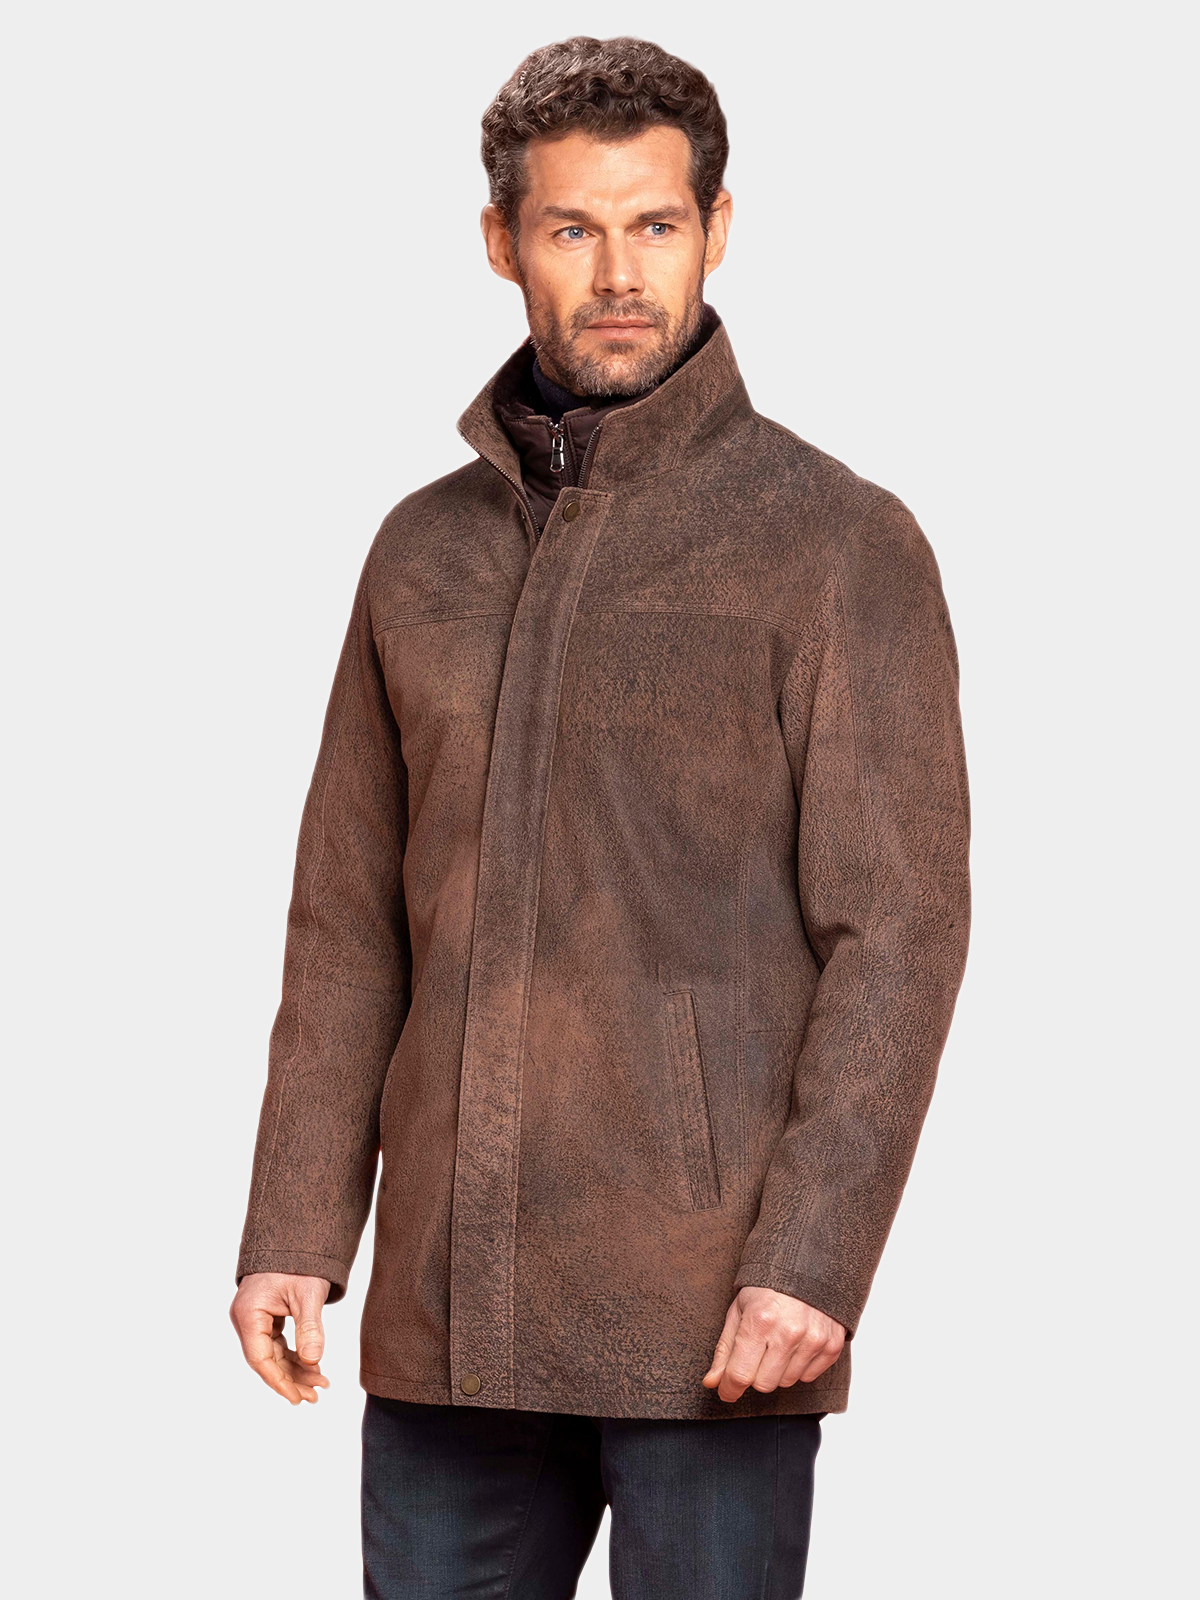 Men's Chestnut Leather / Shearling Jacket | Day Furs